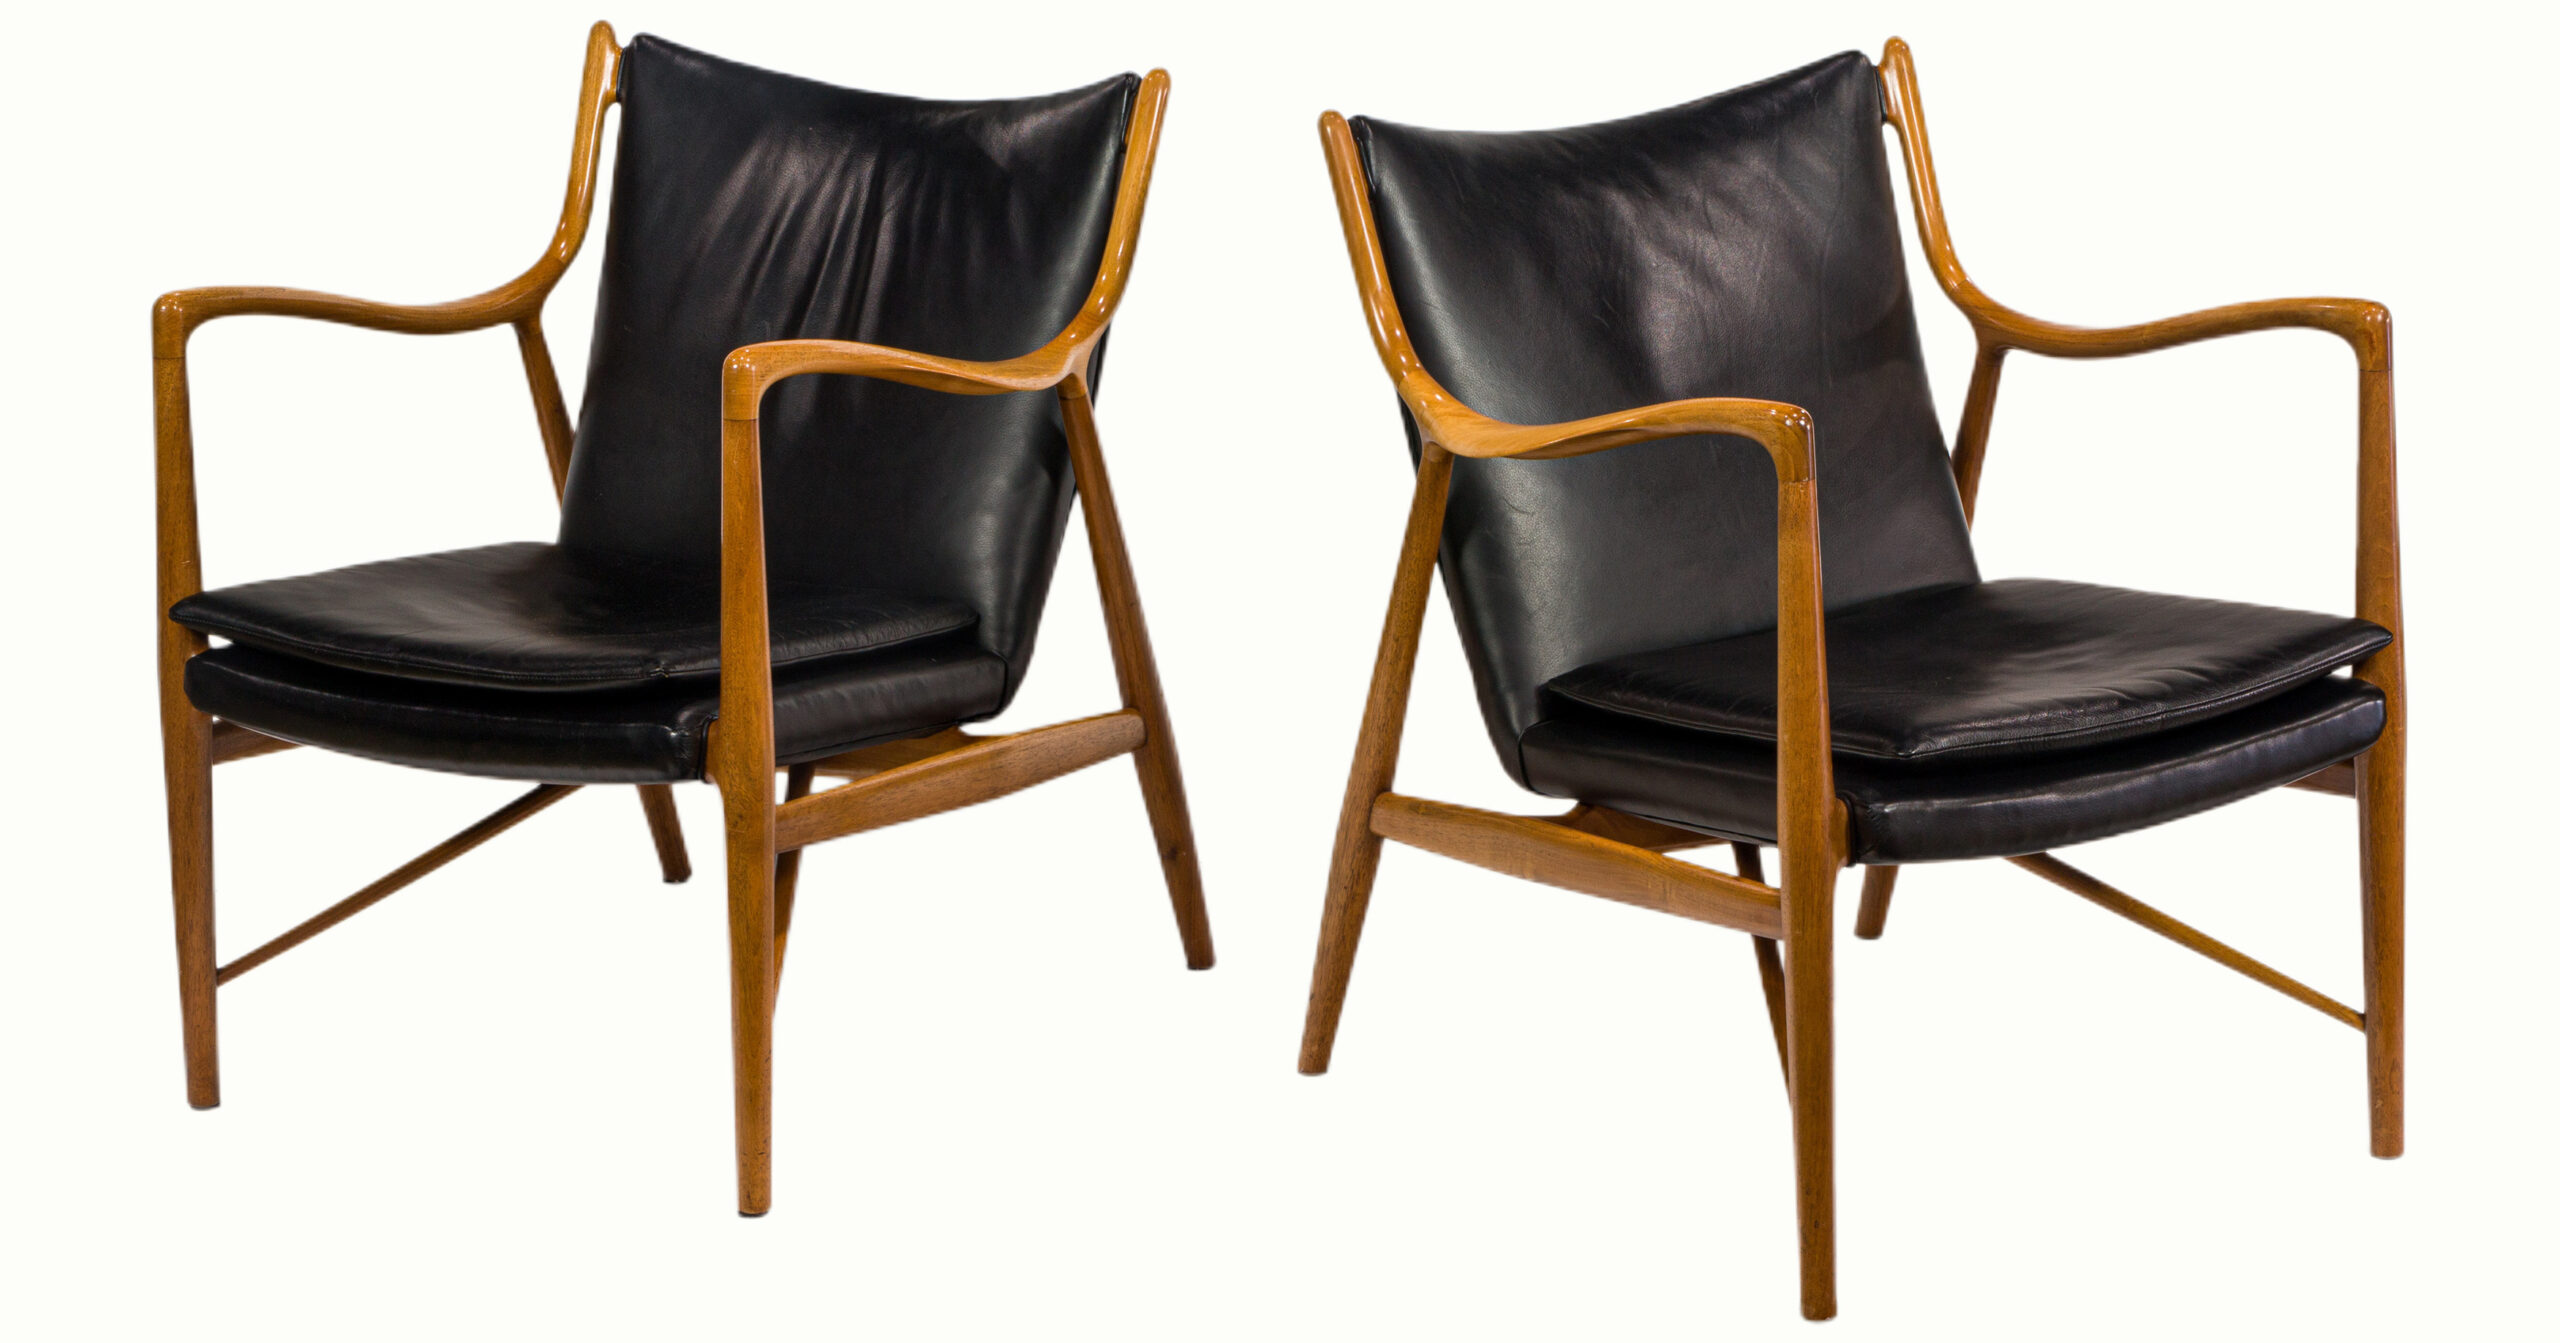 Finn Juhl NV-45 chairs.